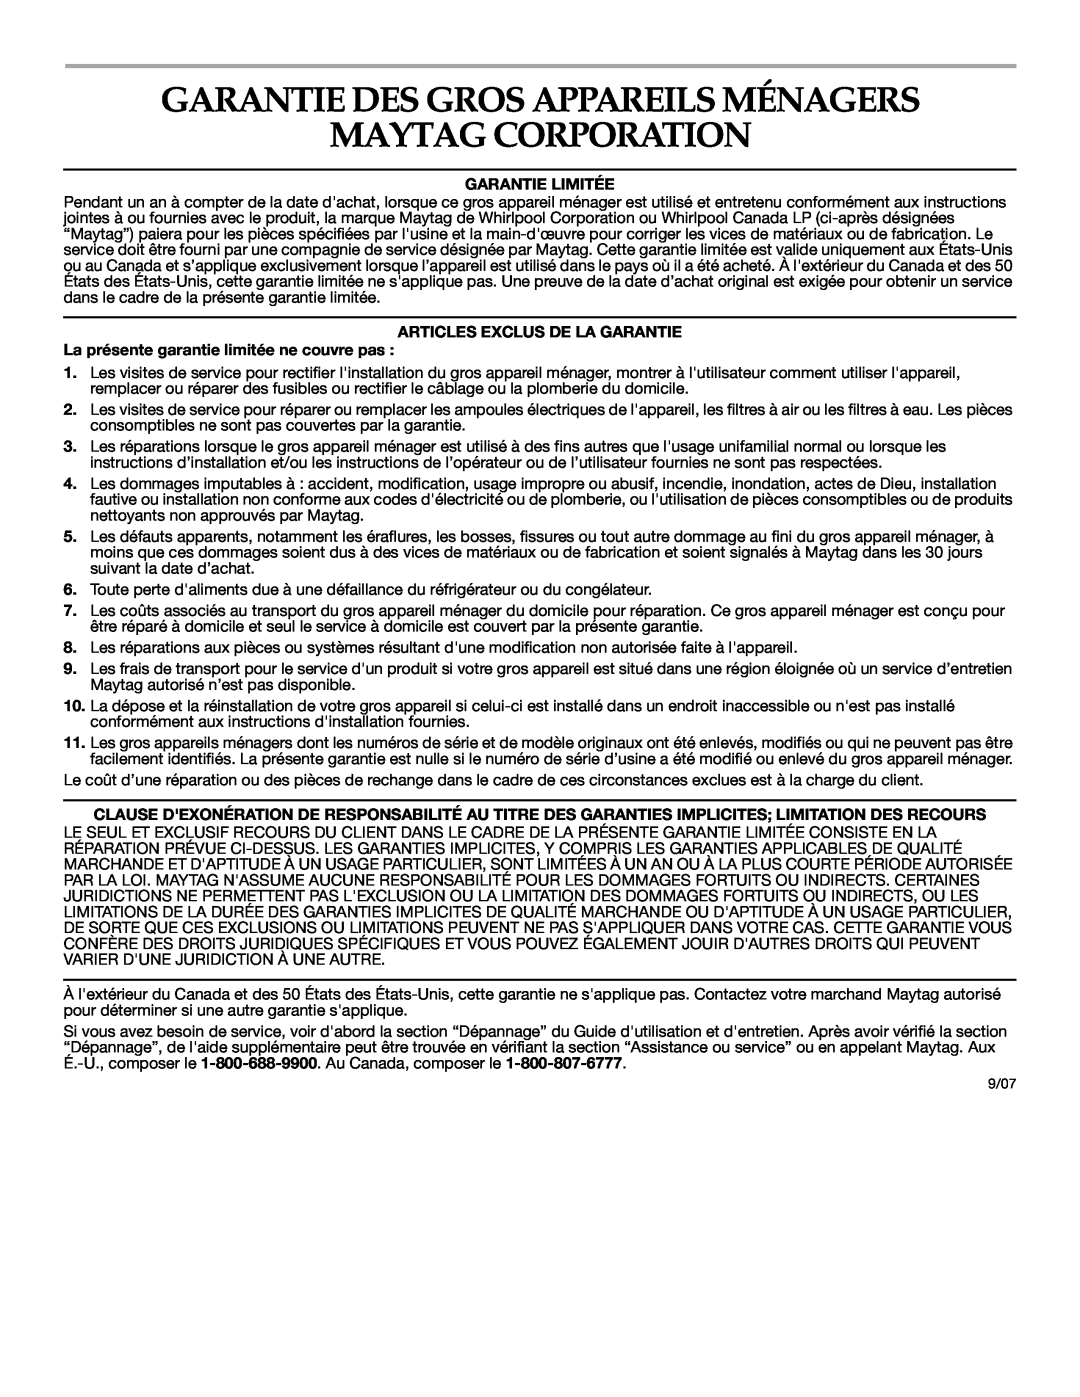 Maytag MGR5775QDW manual Garantie Des Gros Appareils Ménagers Maytag Corporation, Garantie Limitée 